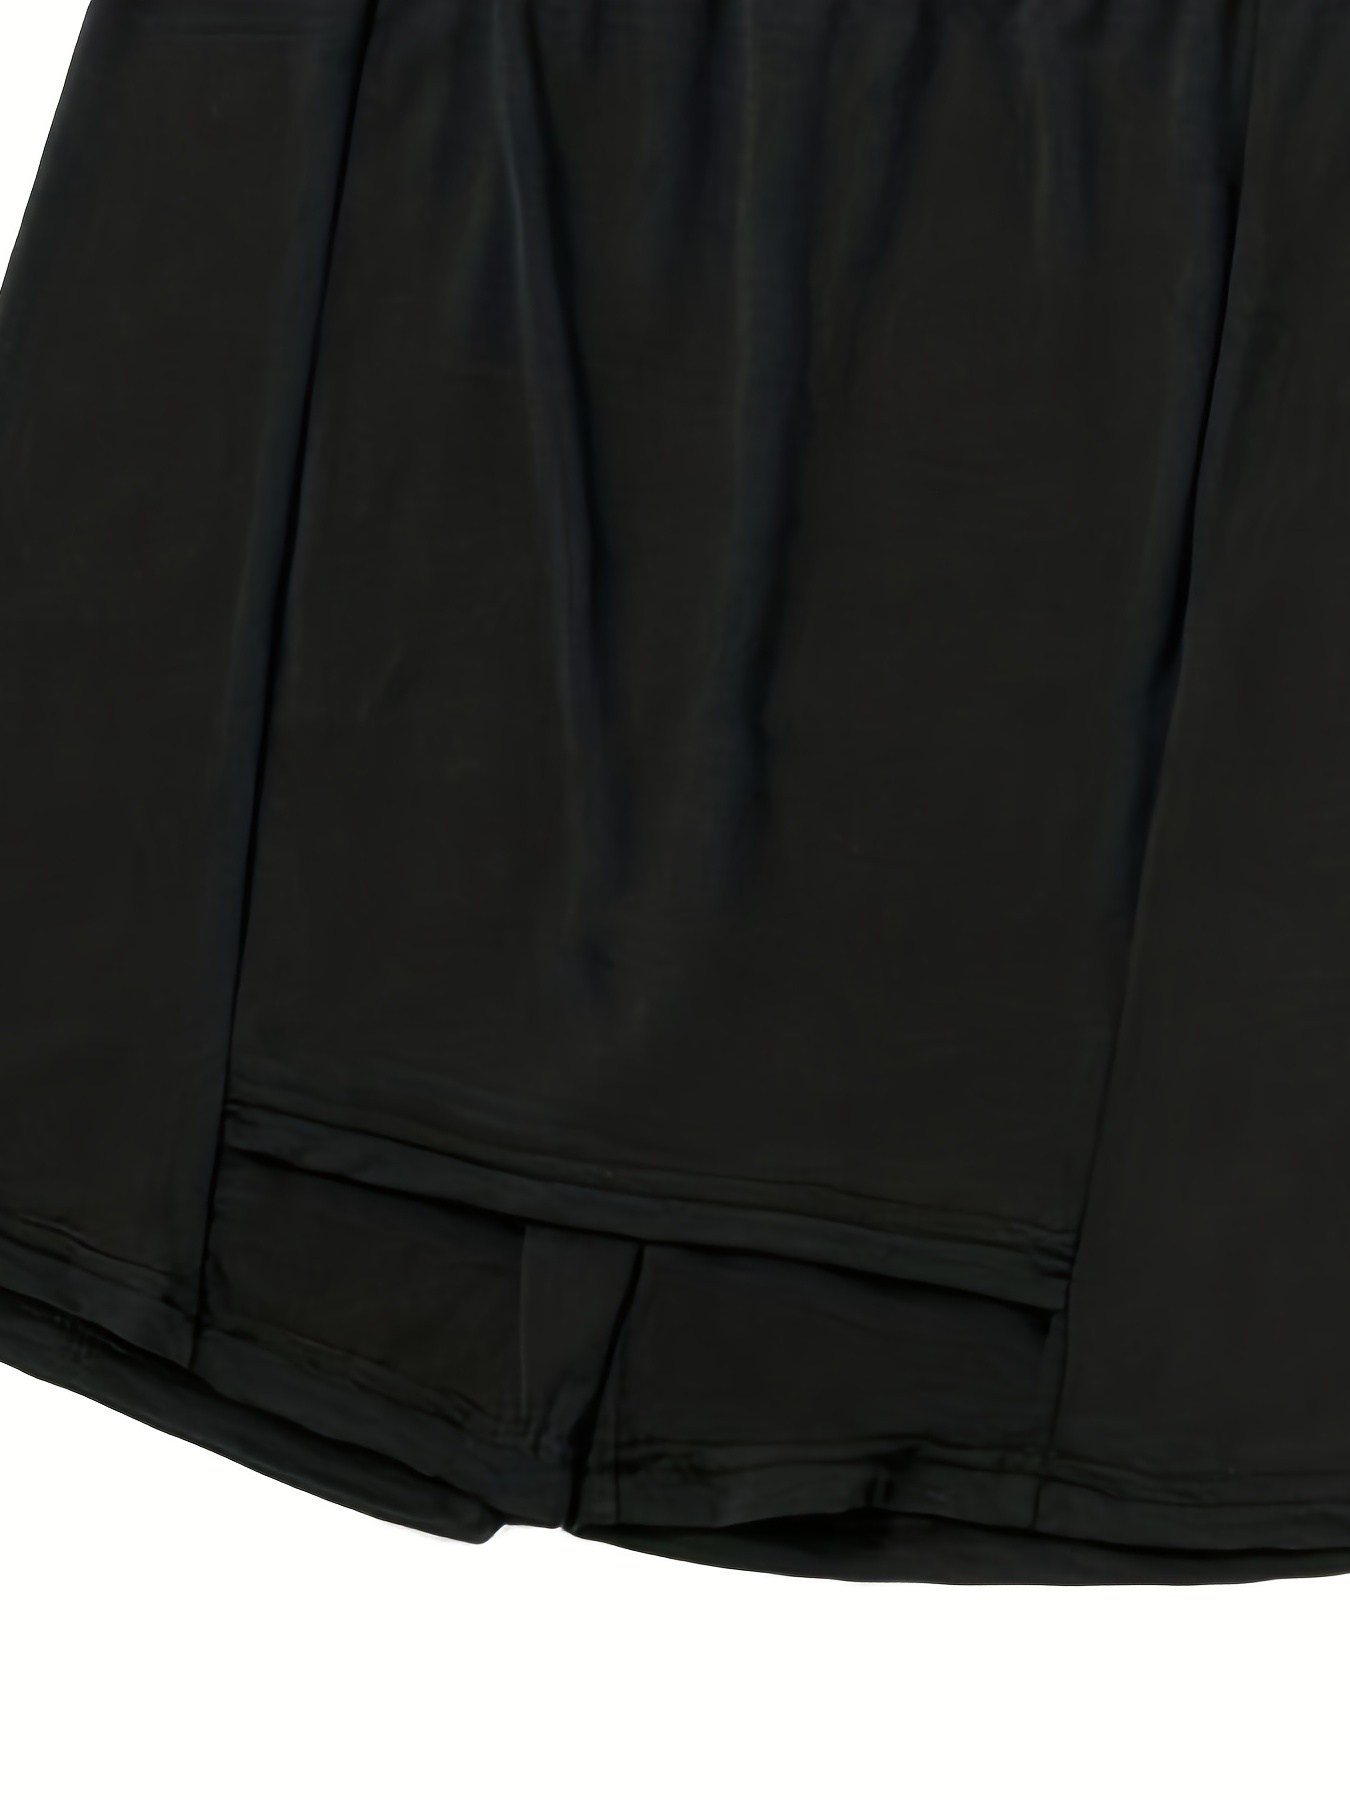 Summe Women Safety Shorts Pants Seamless High Waist Cotton Crotch